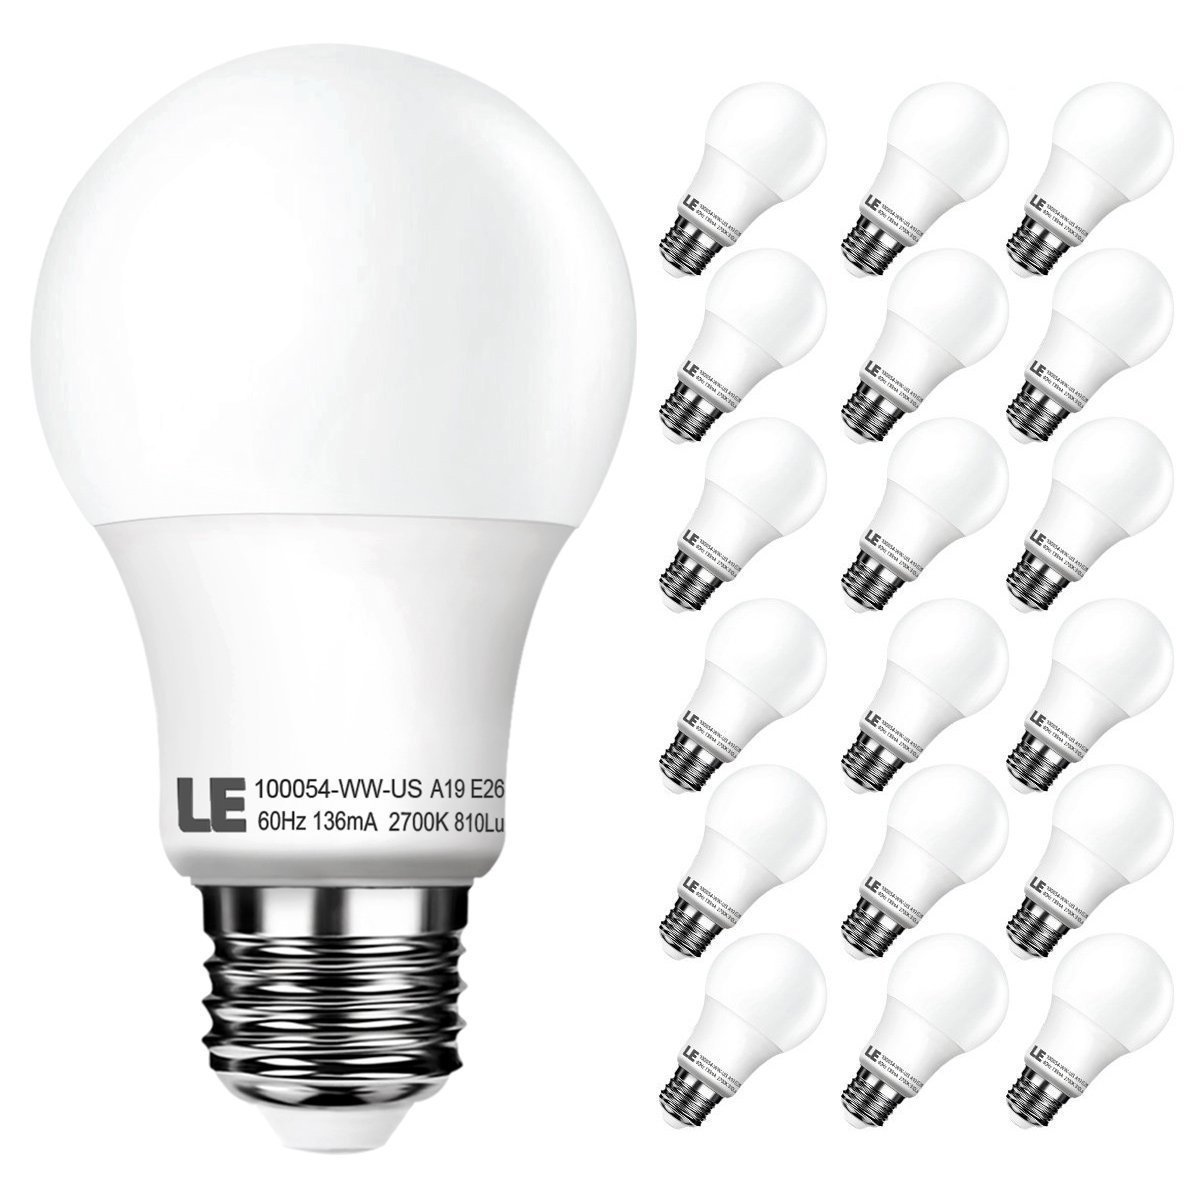 Lighting Ever 18-pack 60W equivalent LED bulbs for $19